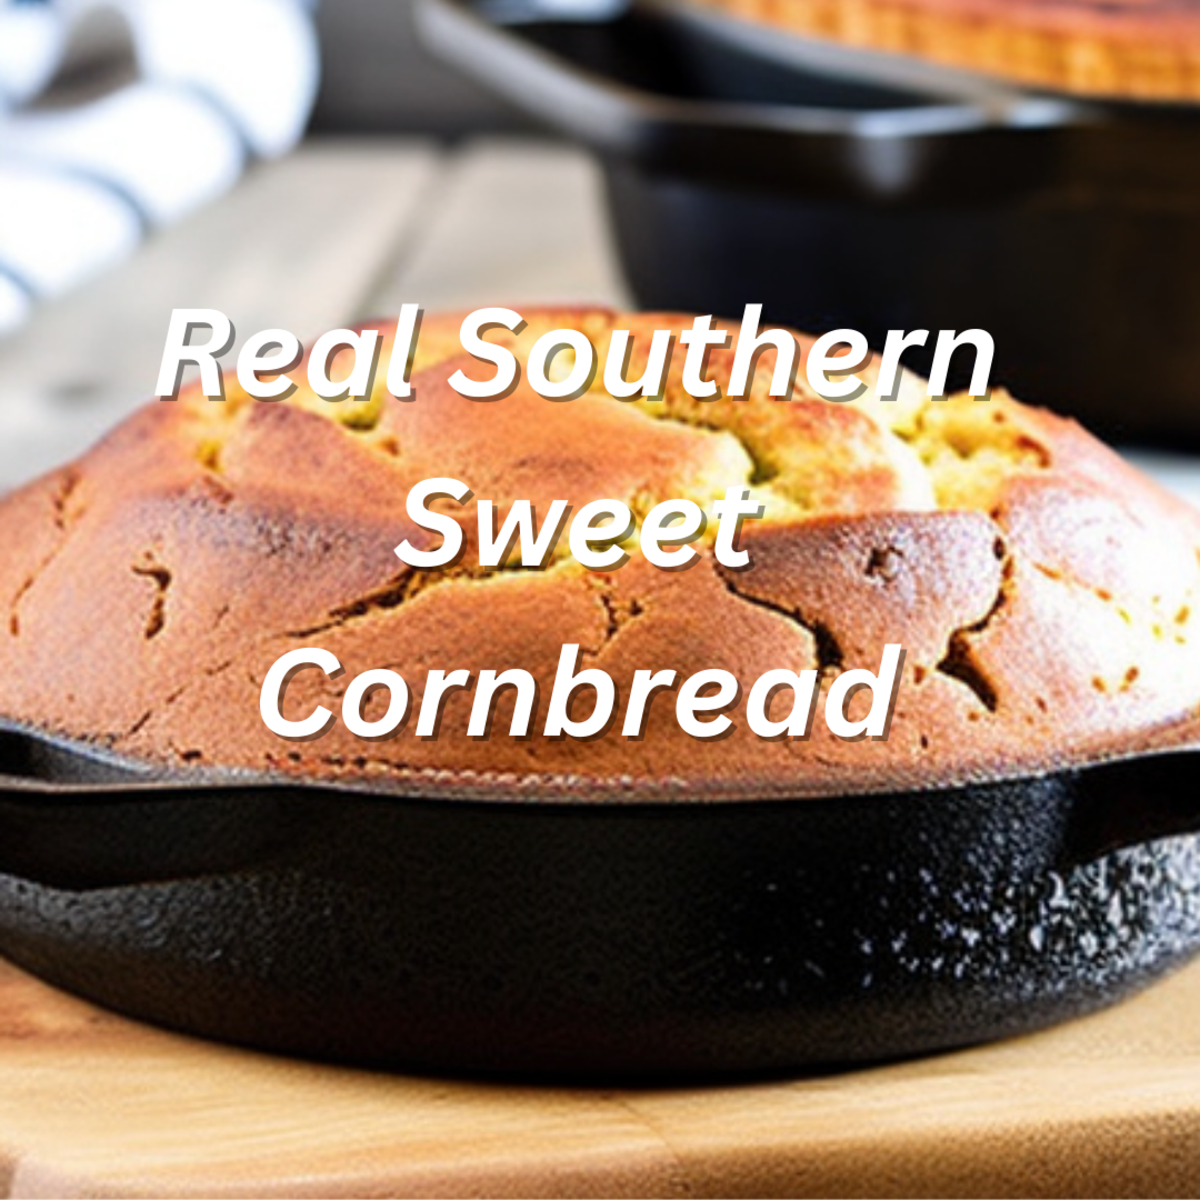 Real Southern Sweet Cornbread